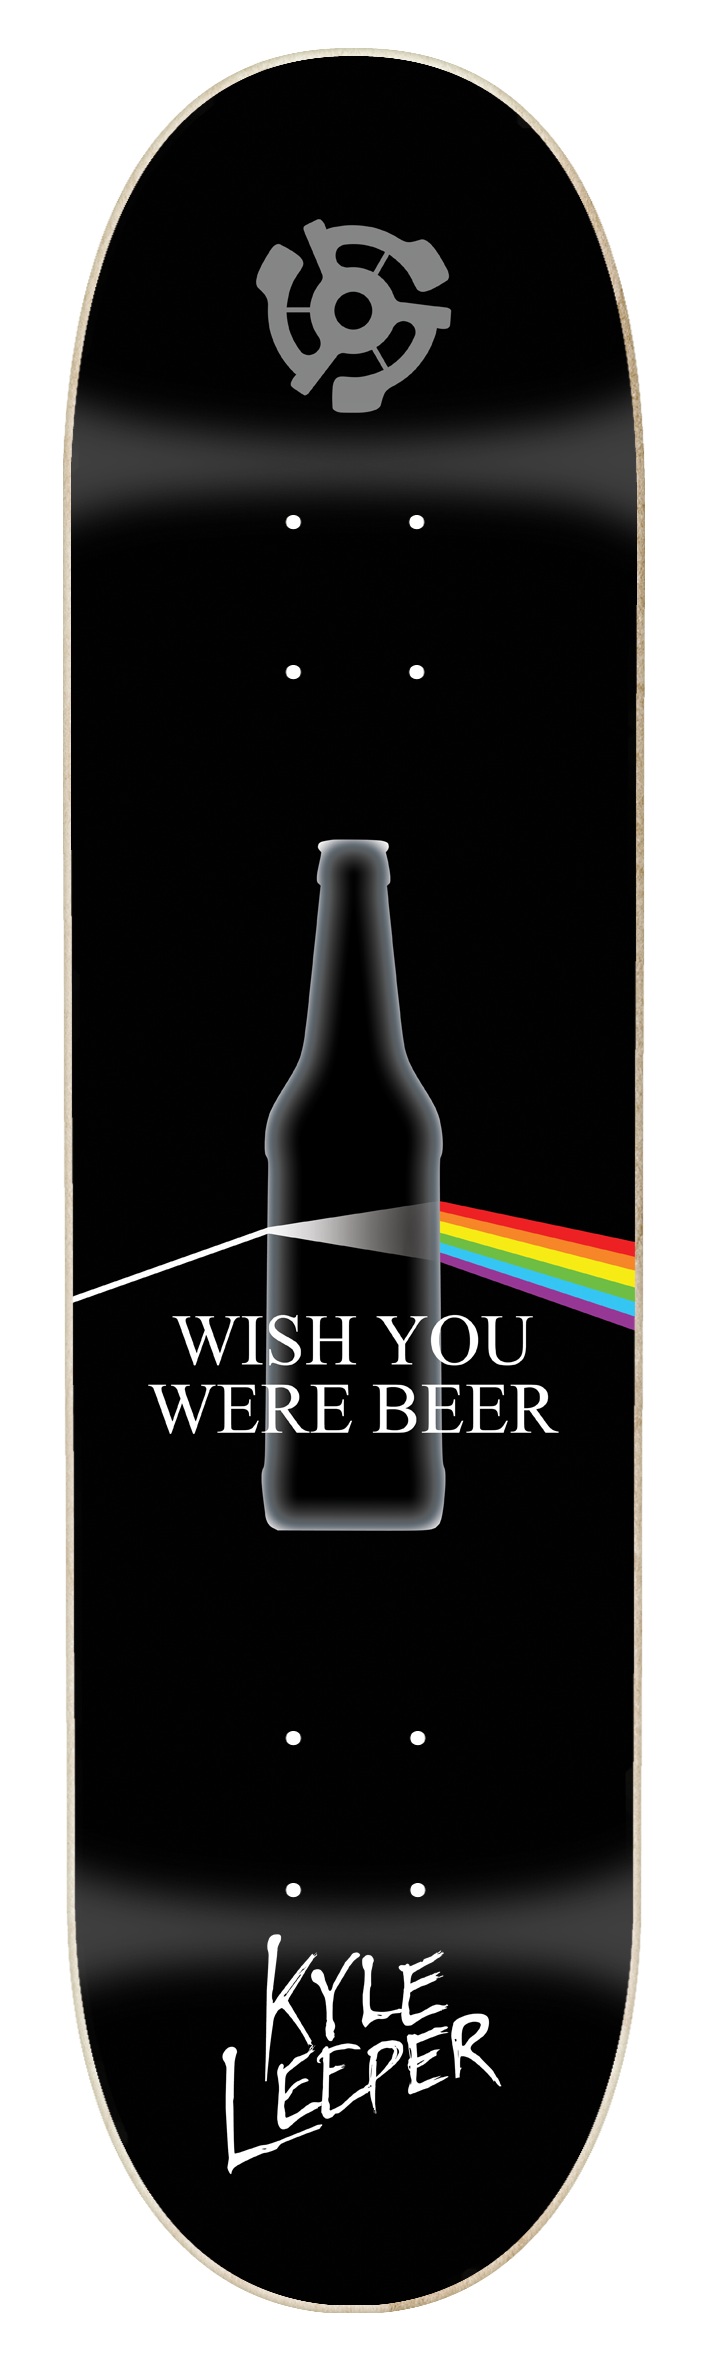 wish-you-were-beer-mockup.png